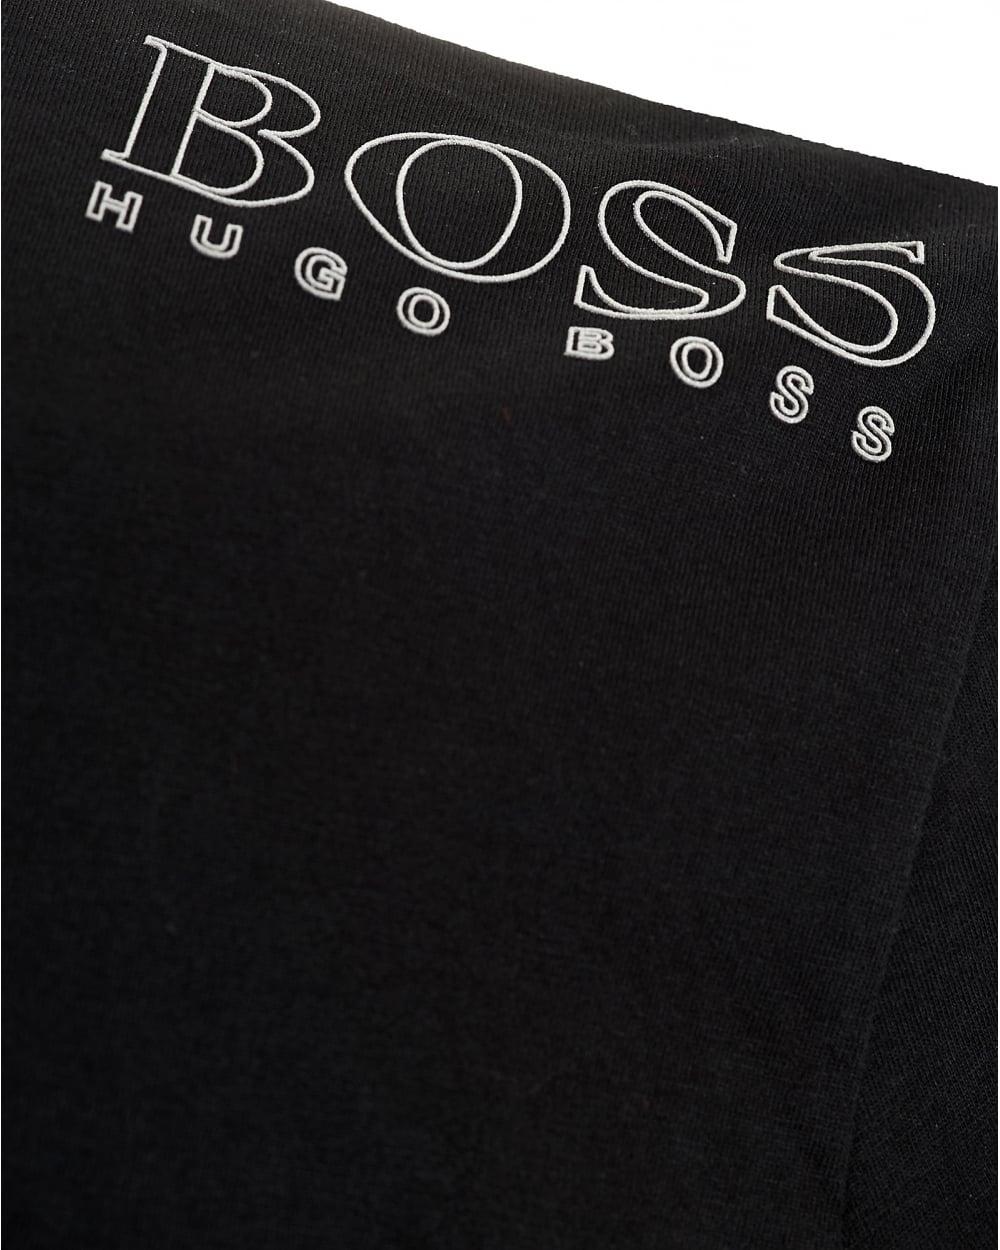 Black Plain Logo - Hugo Boss Green Mens Tee, Black Plain Logo T Shirt